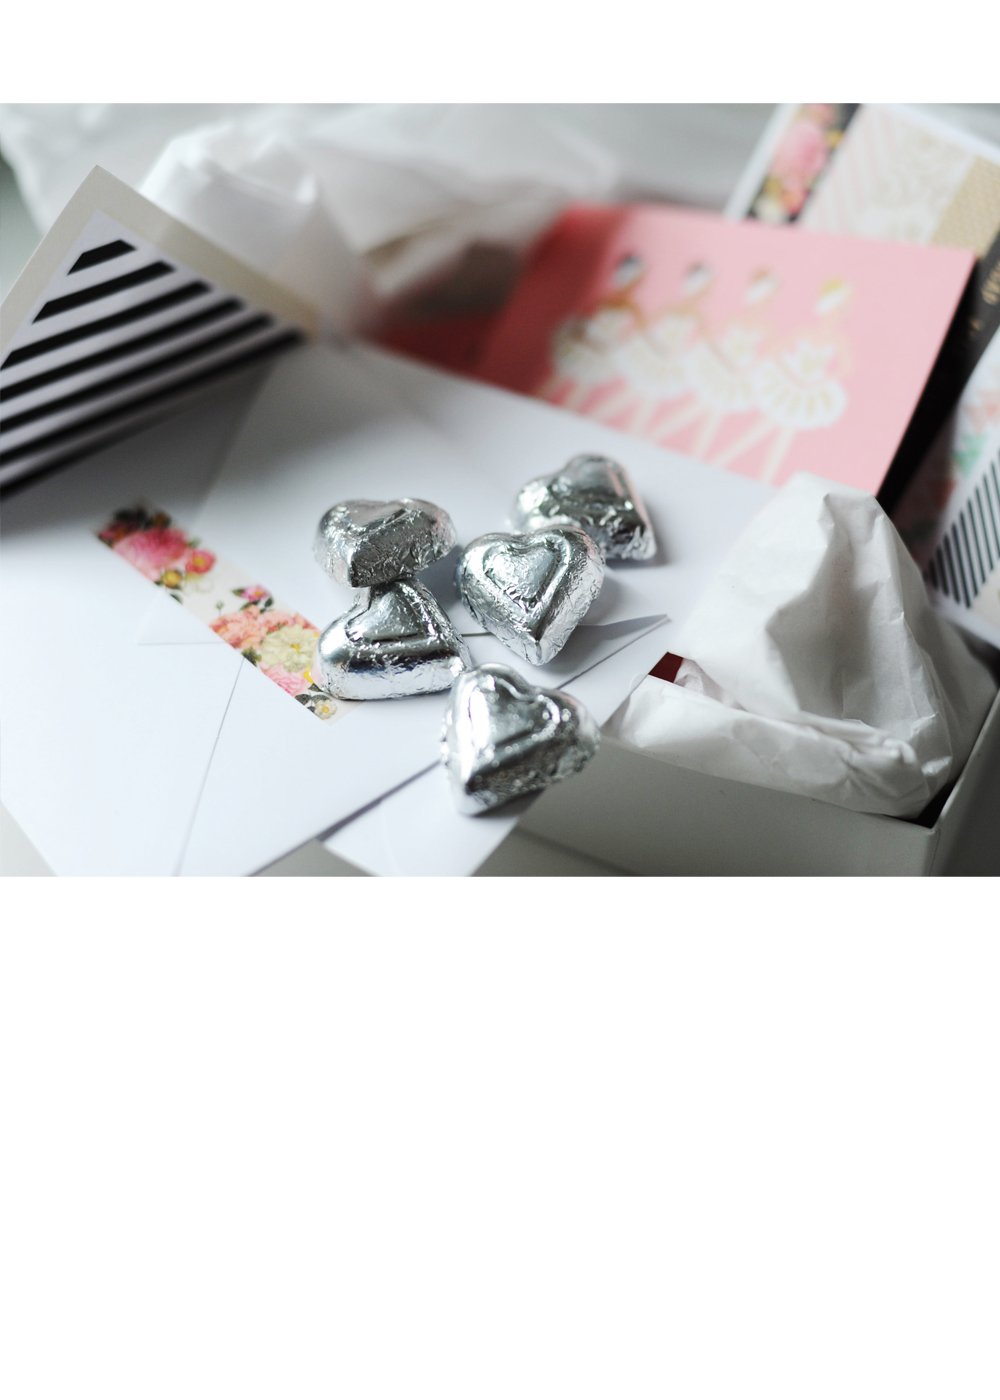 Wholesale Madelaine Chocolate Miniature Silver Hearts - 10 Lb Bag Bulk